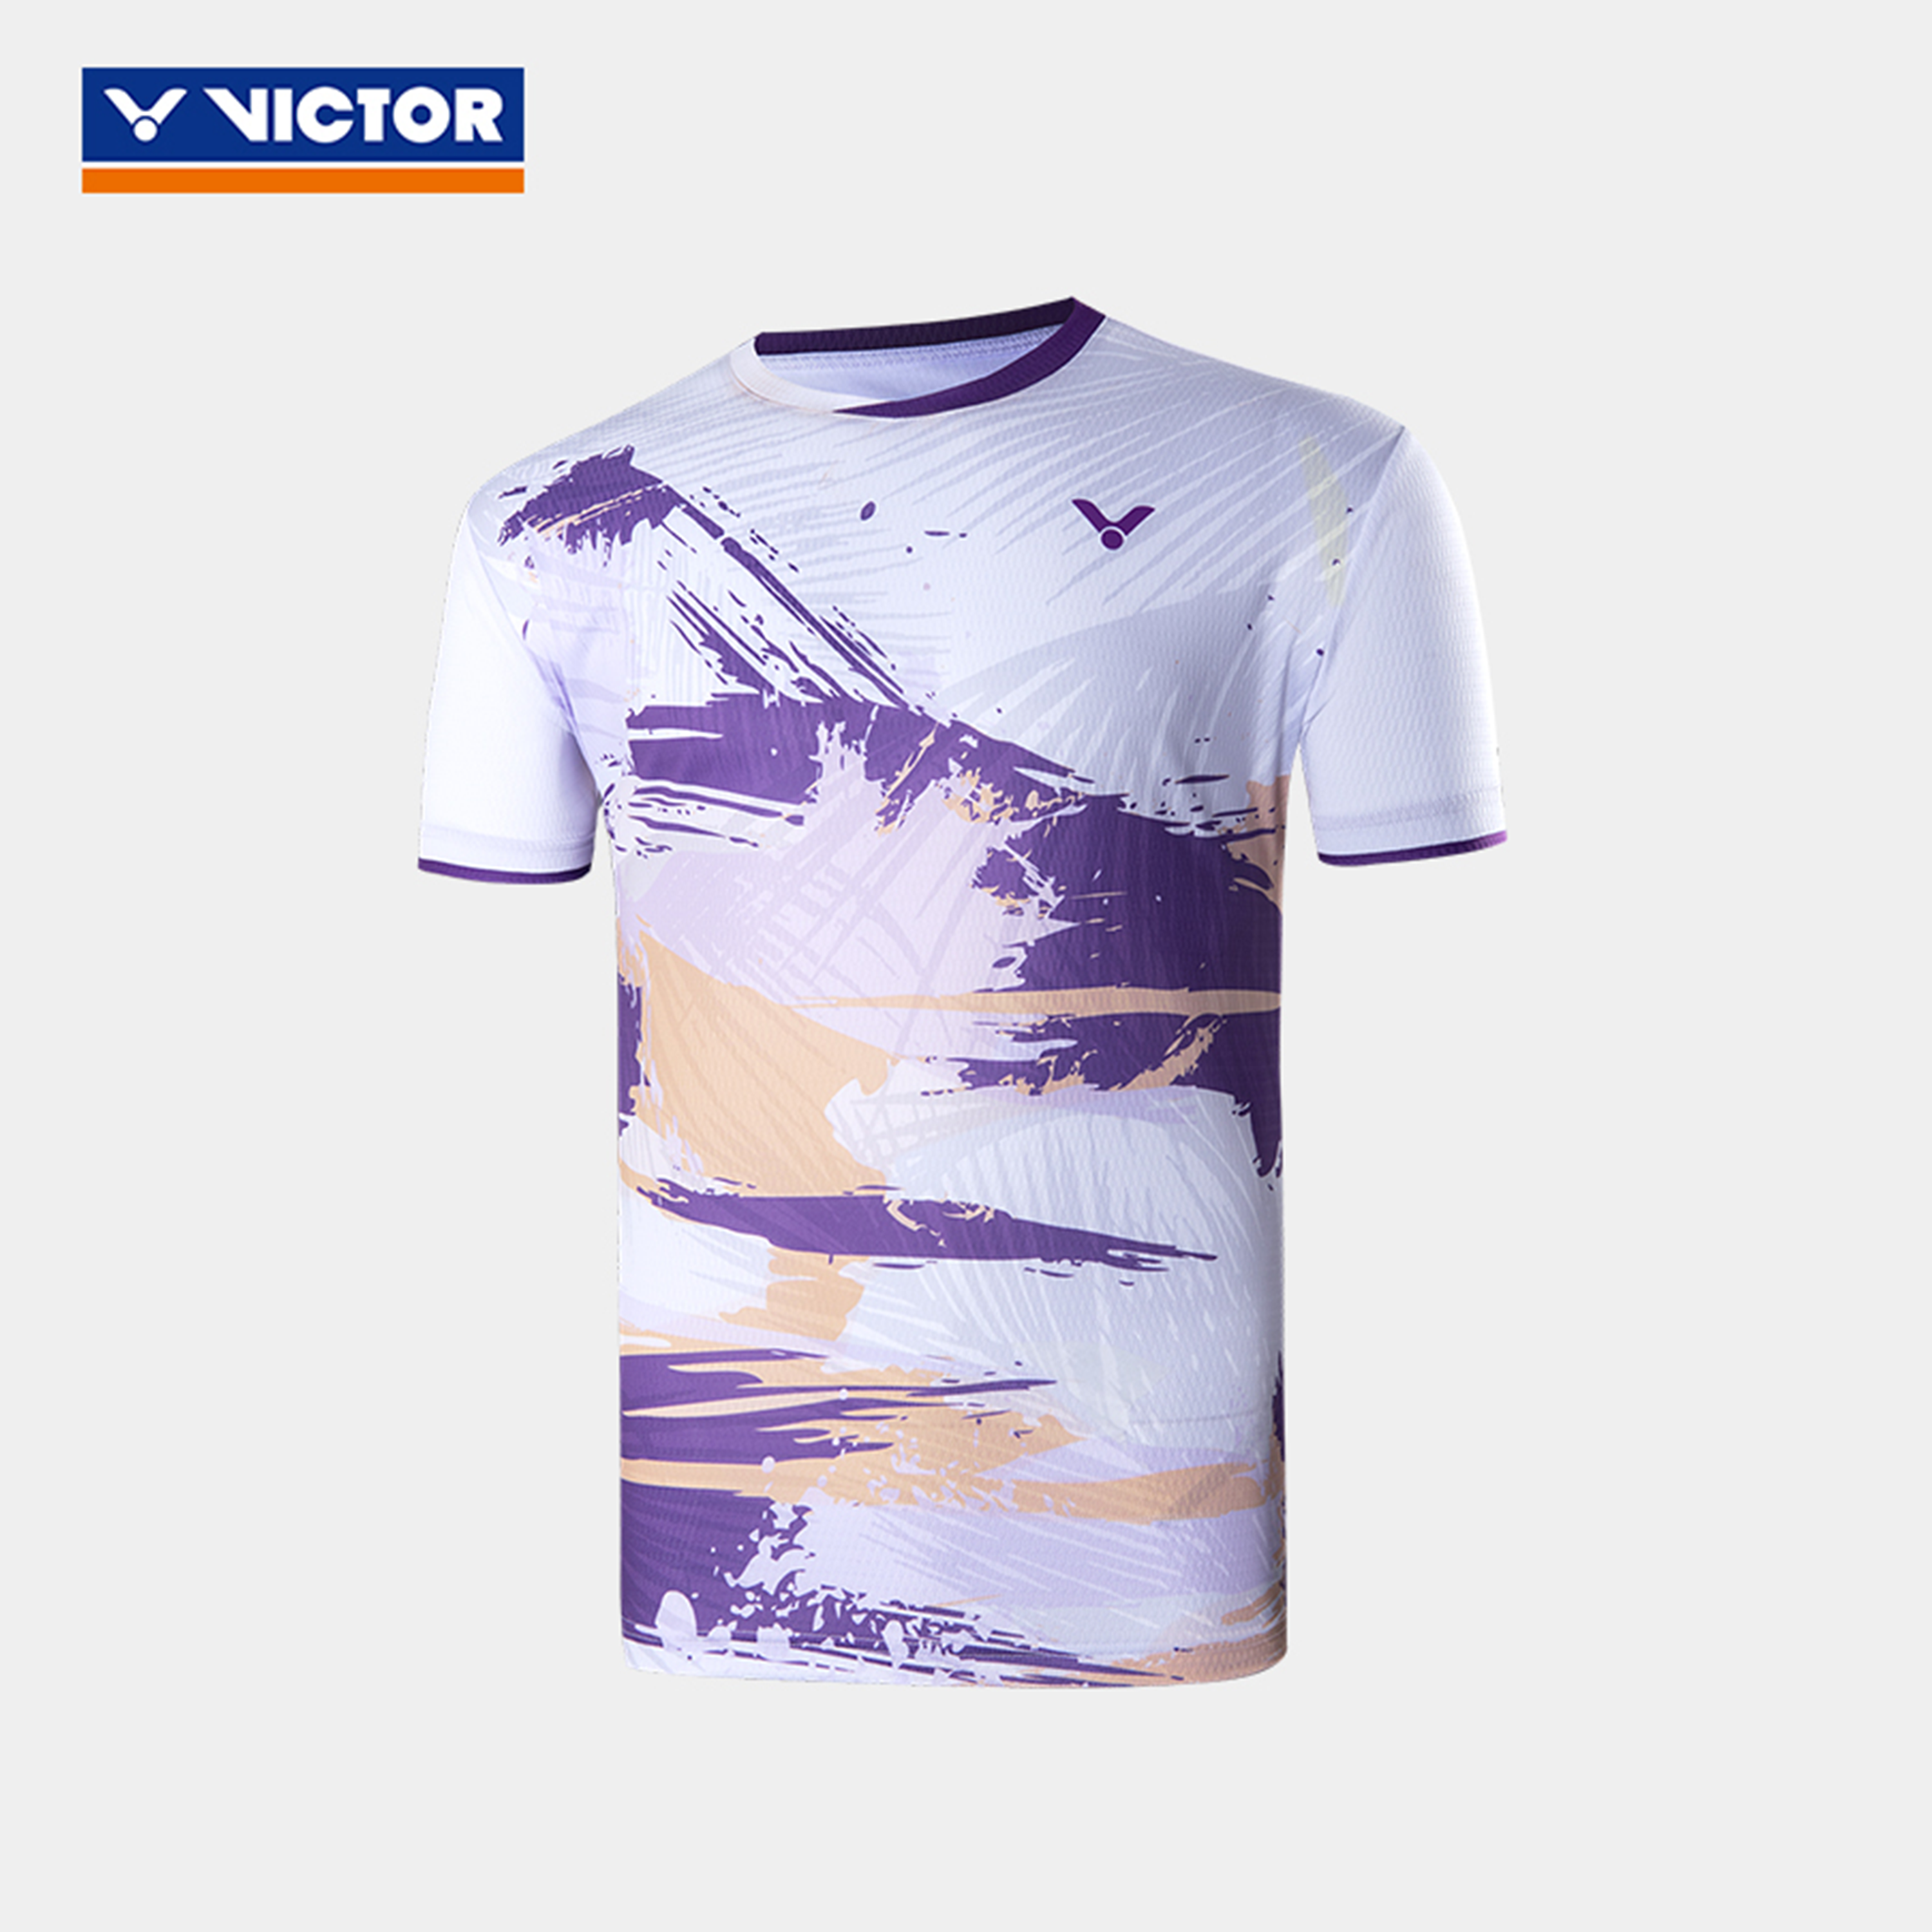 Victor T-35000TDJ Sports Shirt Lilac Purple MEN'S (Clearance)